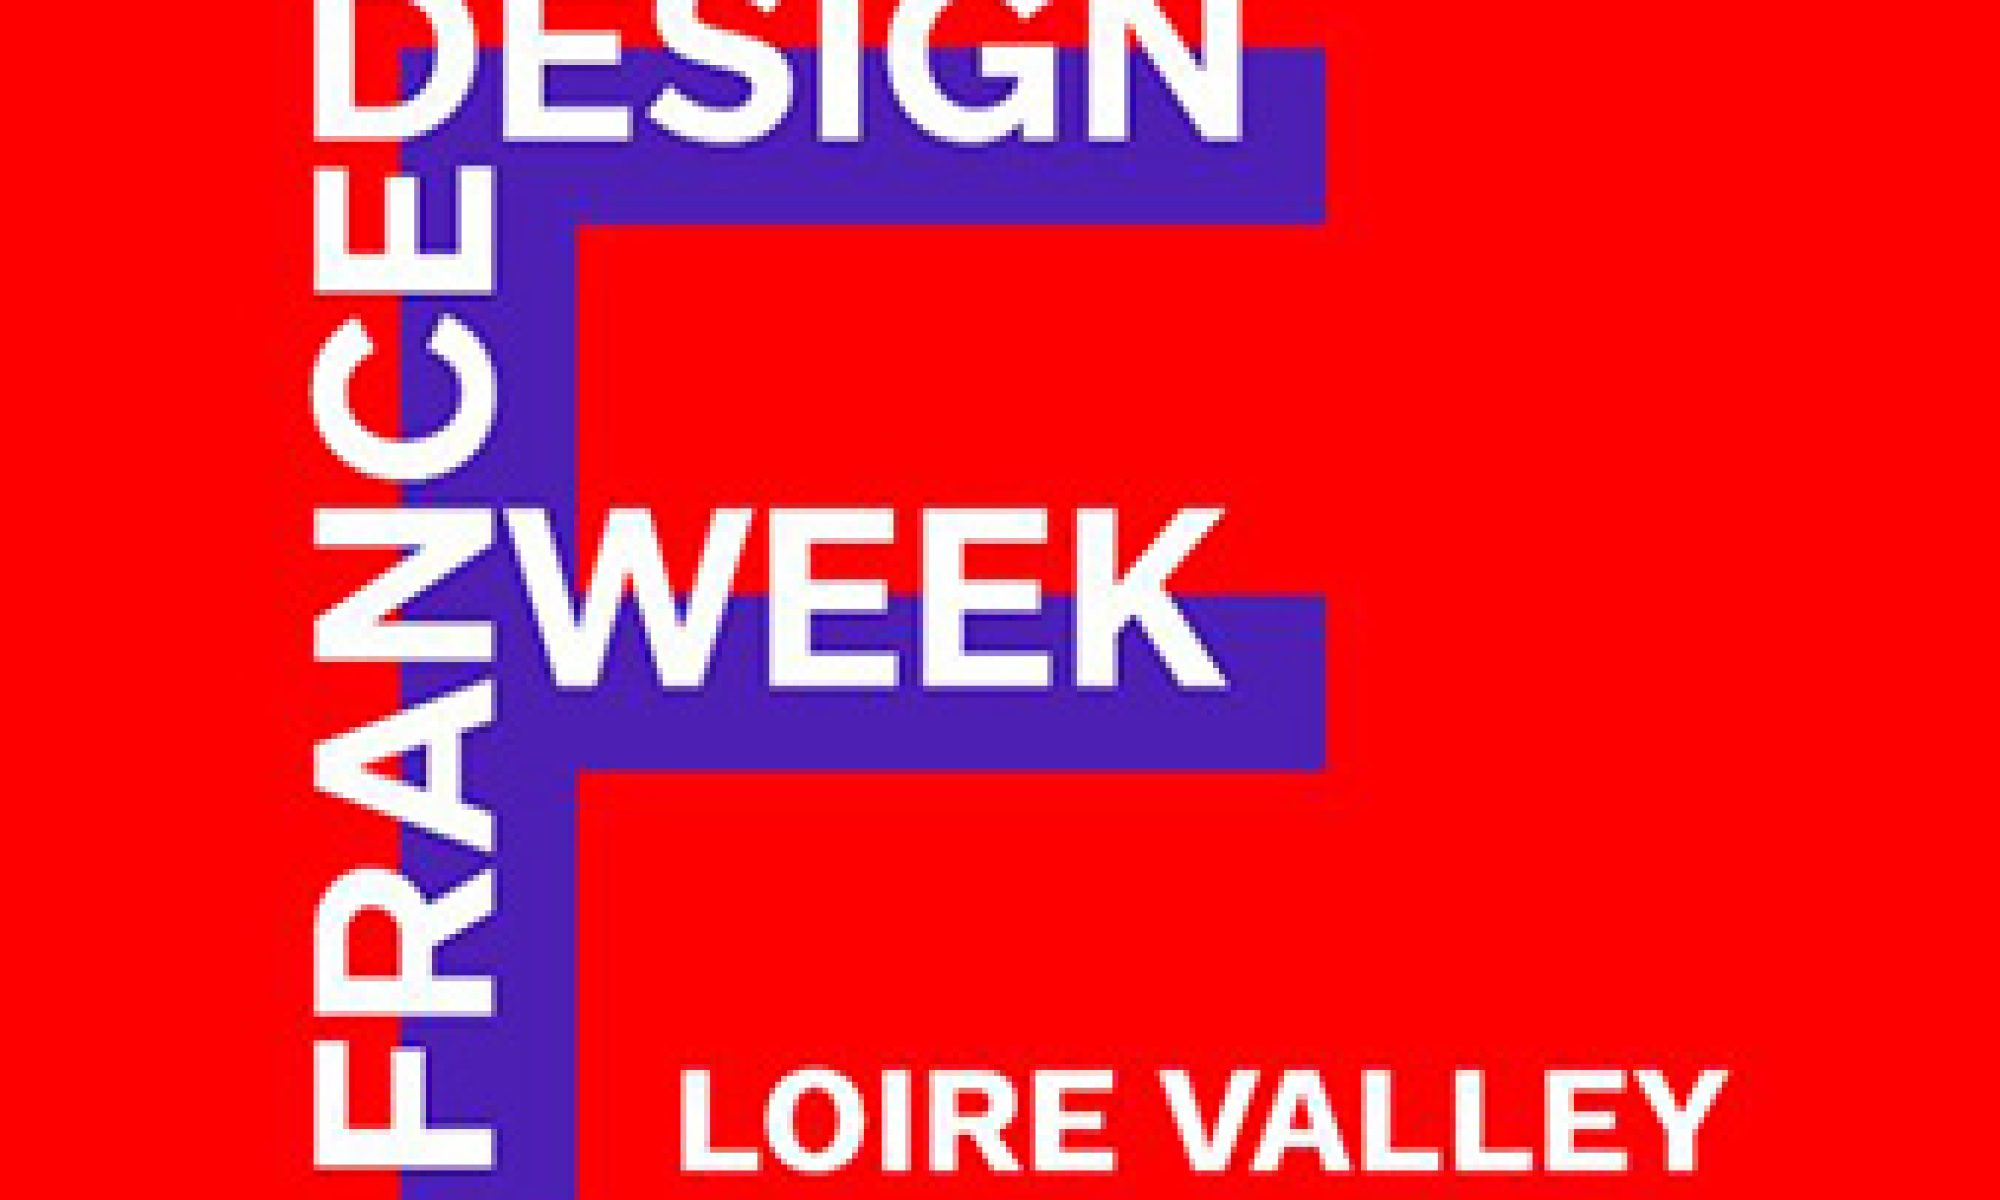 Actu - Prochain évènement : Design week Loire Valley